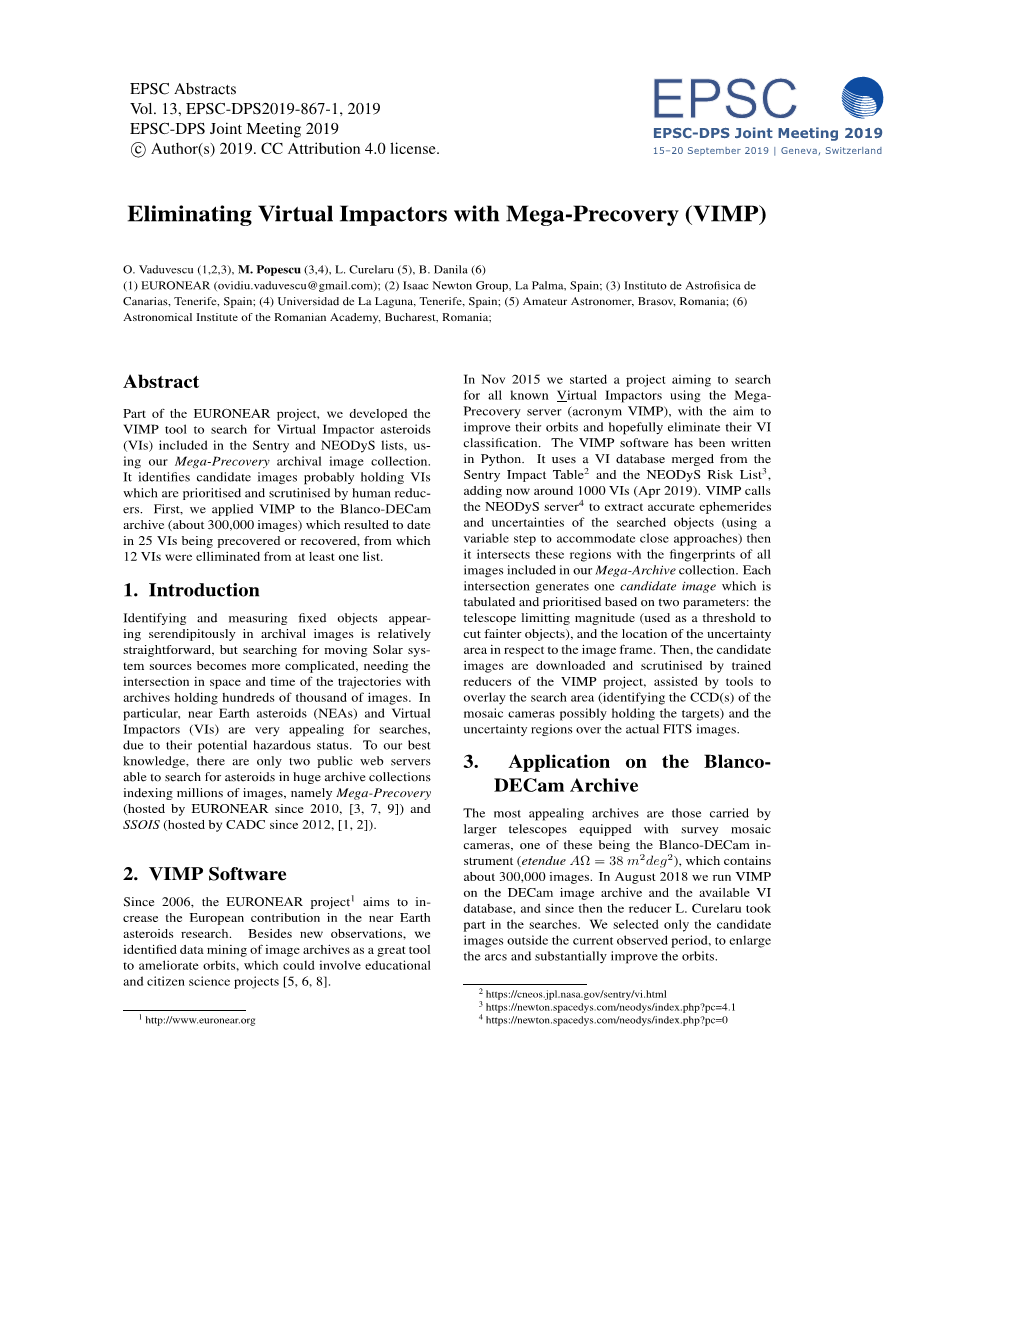 Eliminating Virtual Impactors with Mega-Precovery (VIMP)